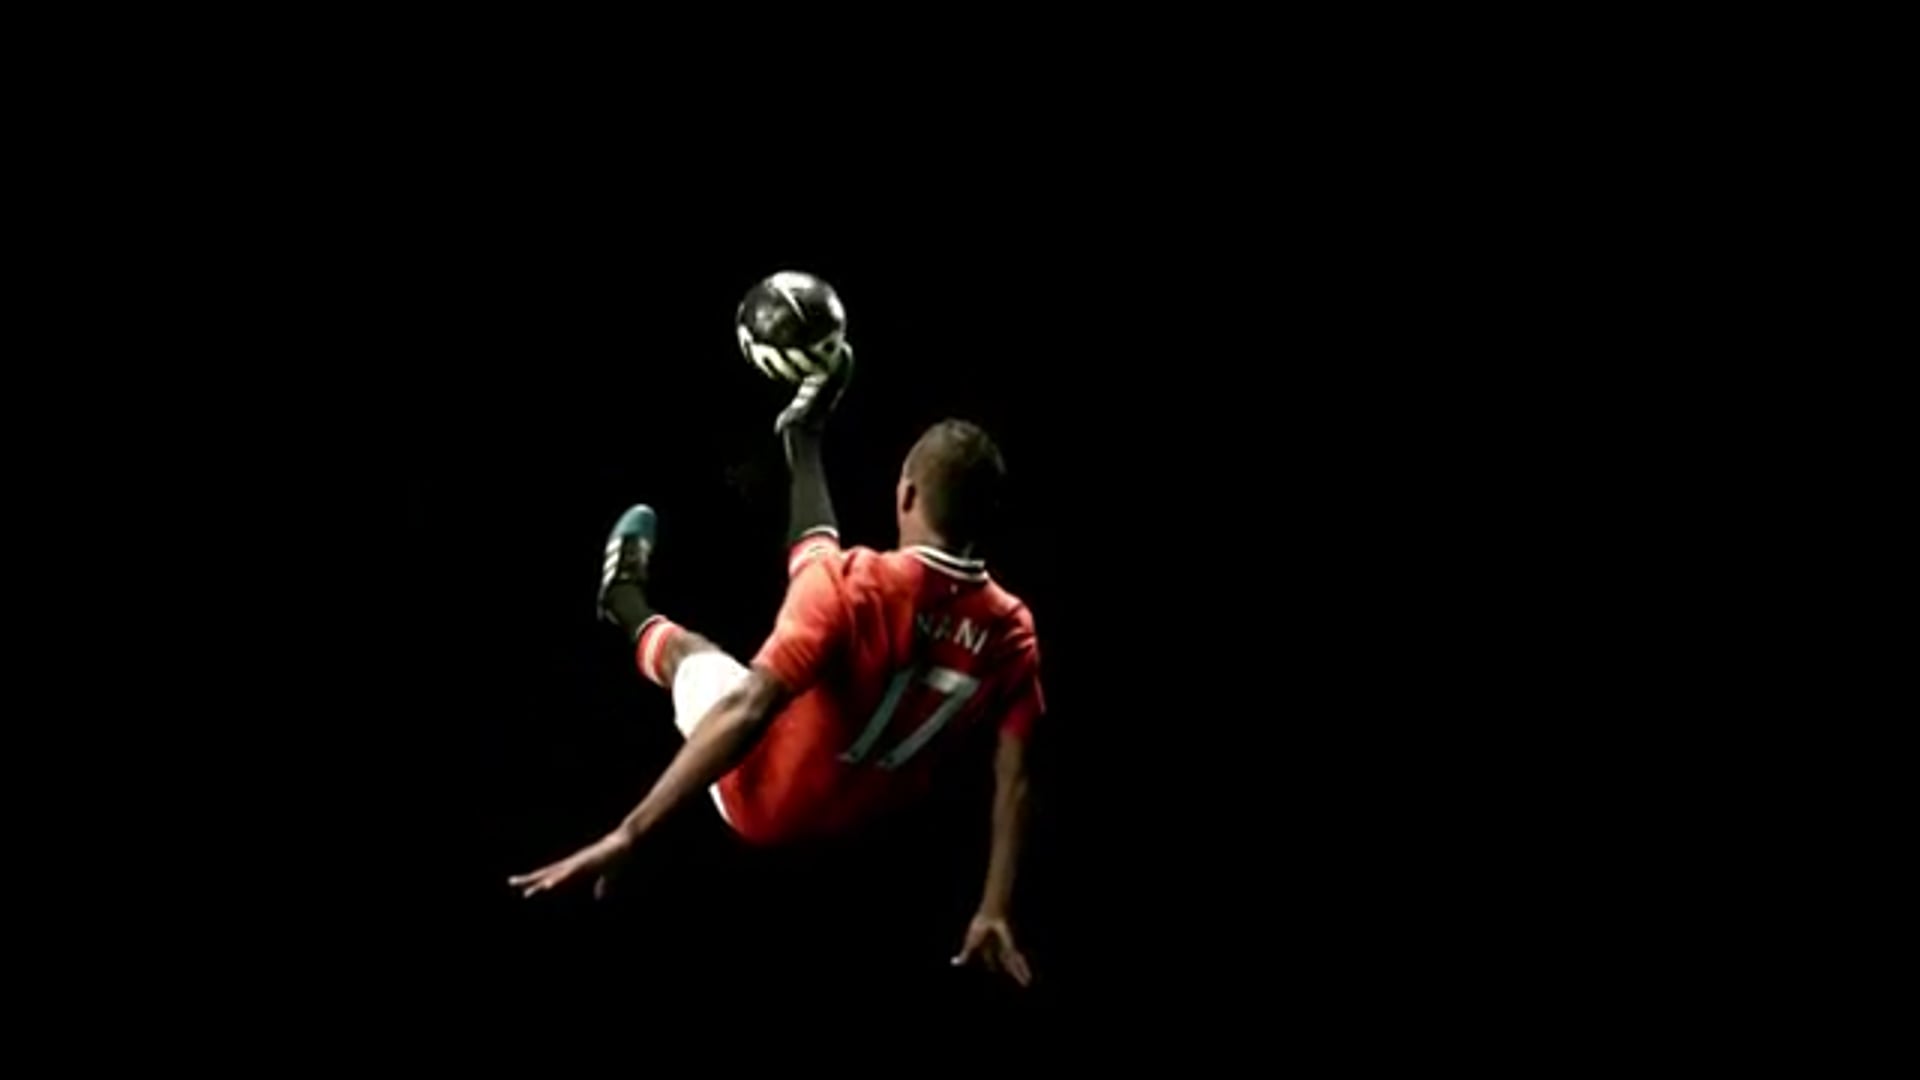 Epson 3D Manchester United Shoot